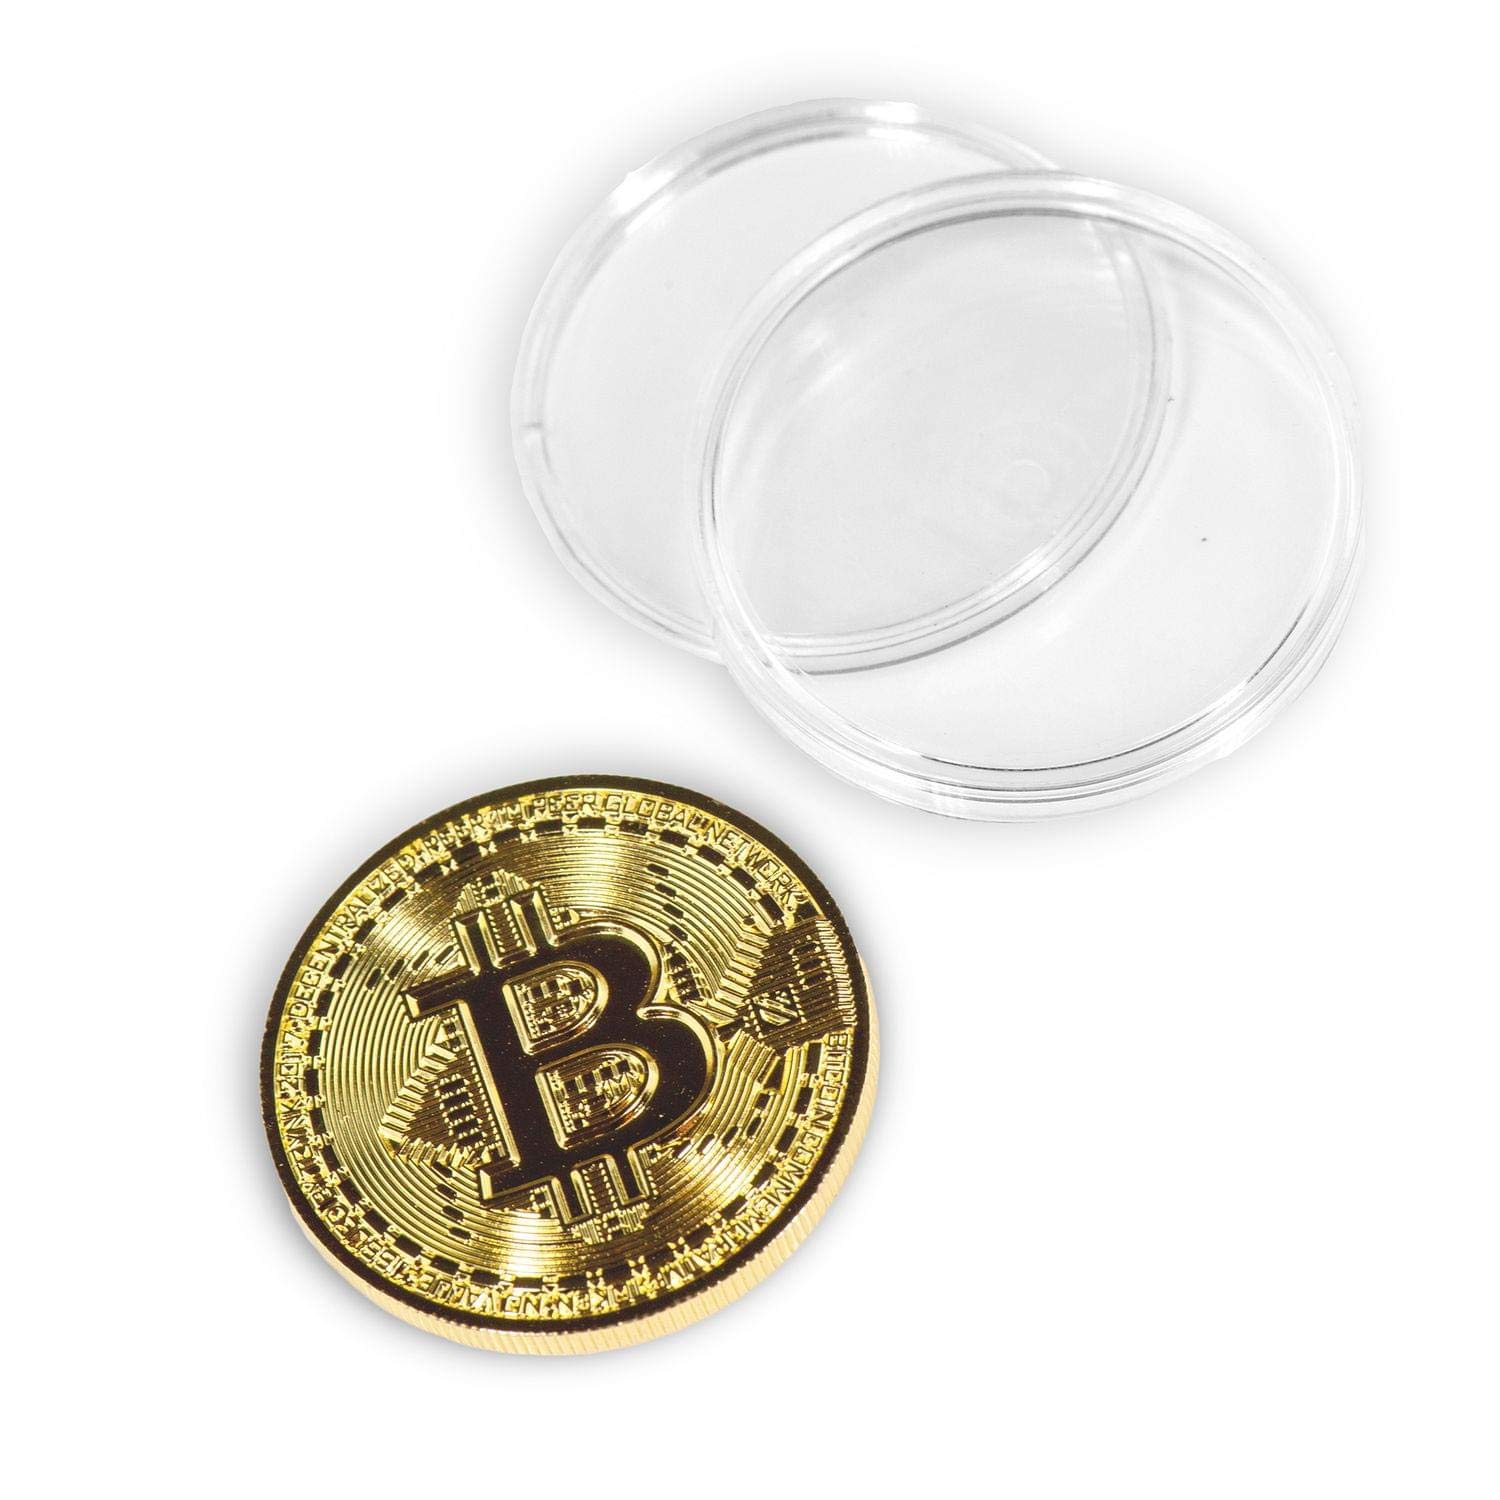 10 Pcs Bitcoin Coin Souvenir with Coin Case, Physical Bitcoin Collection, Gold Plated Bitcoin for Commemoration, Crypto Currency Coin BTC for Gift, Gold Bitcoin Tokens